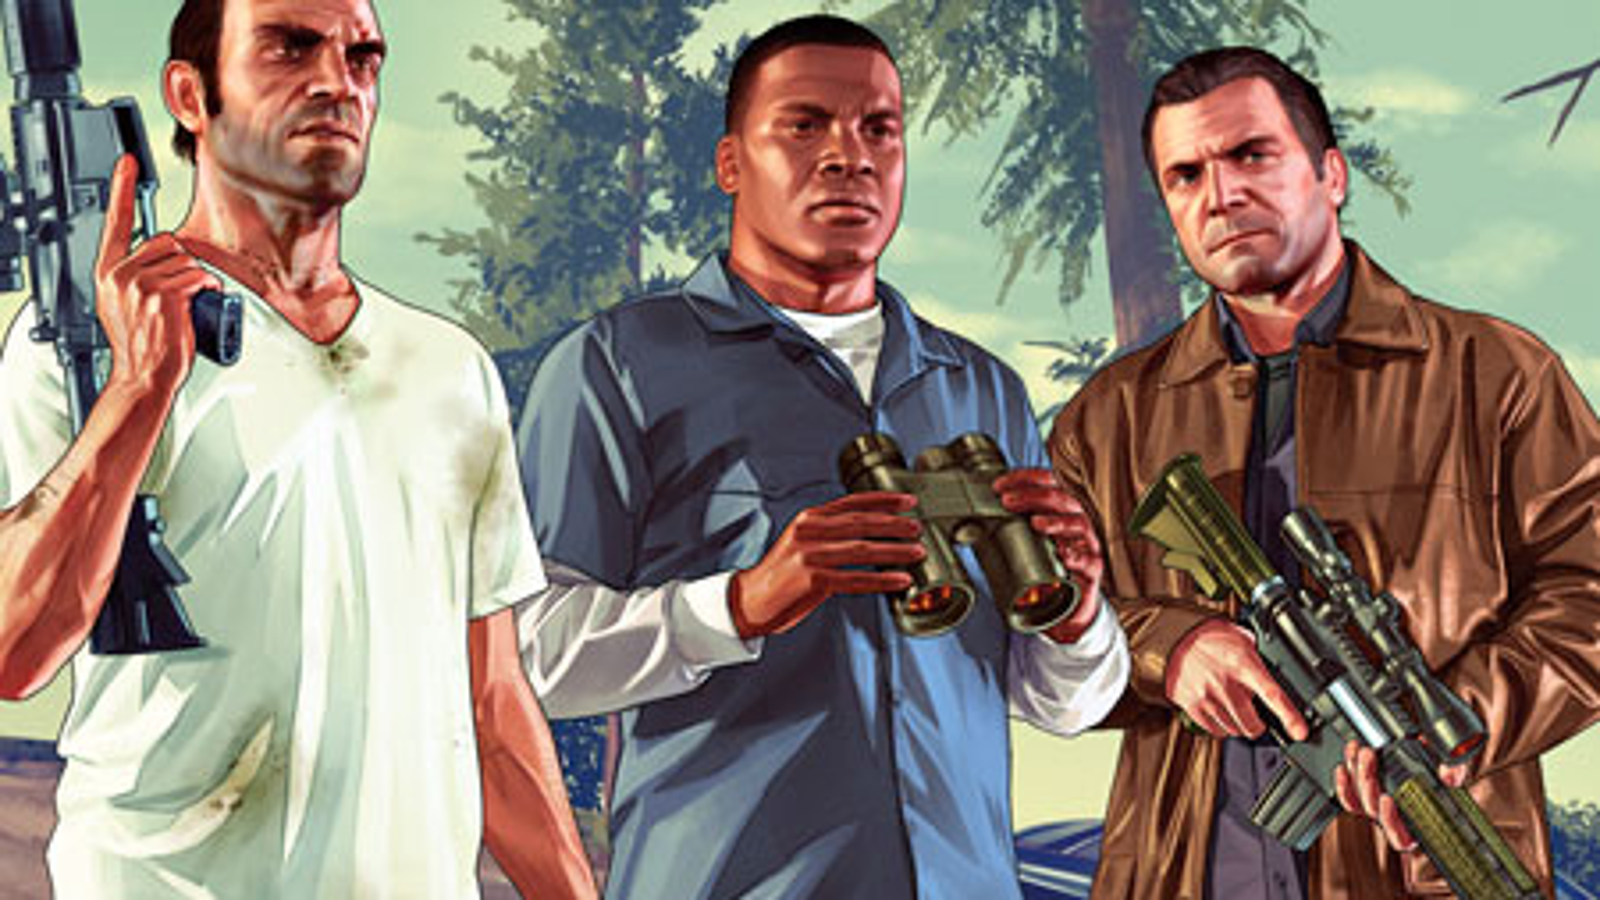 Deducir bisonte Fraude Análisis de Grand Theft Auto 5 | Eurogamer.es